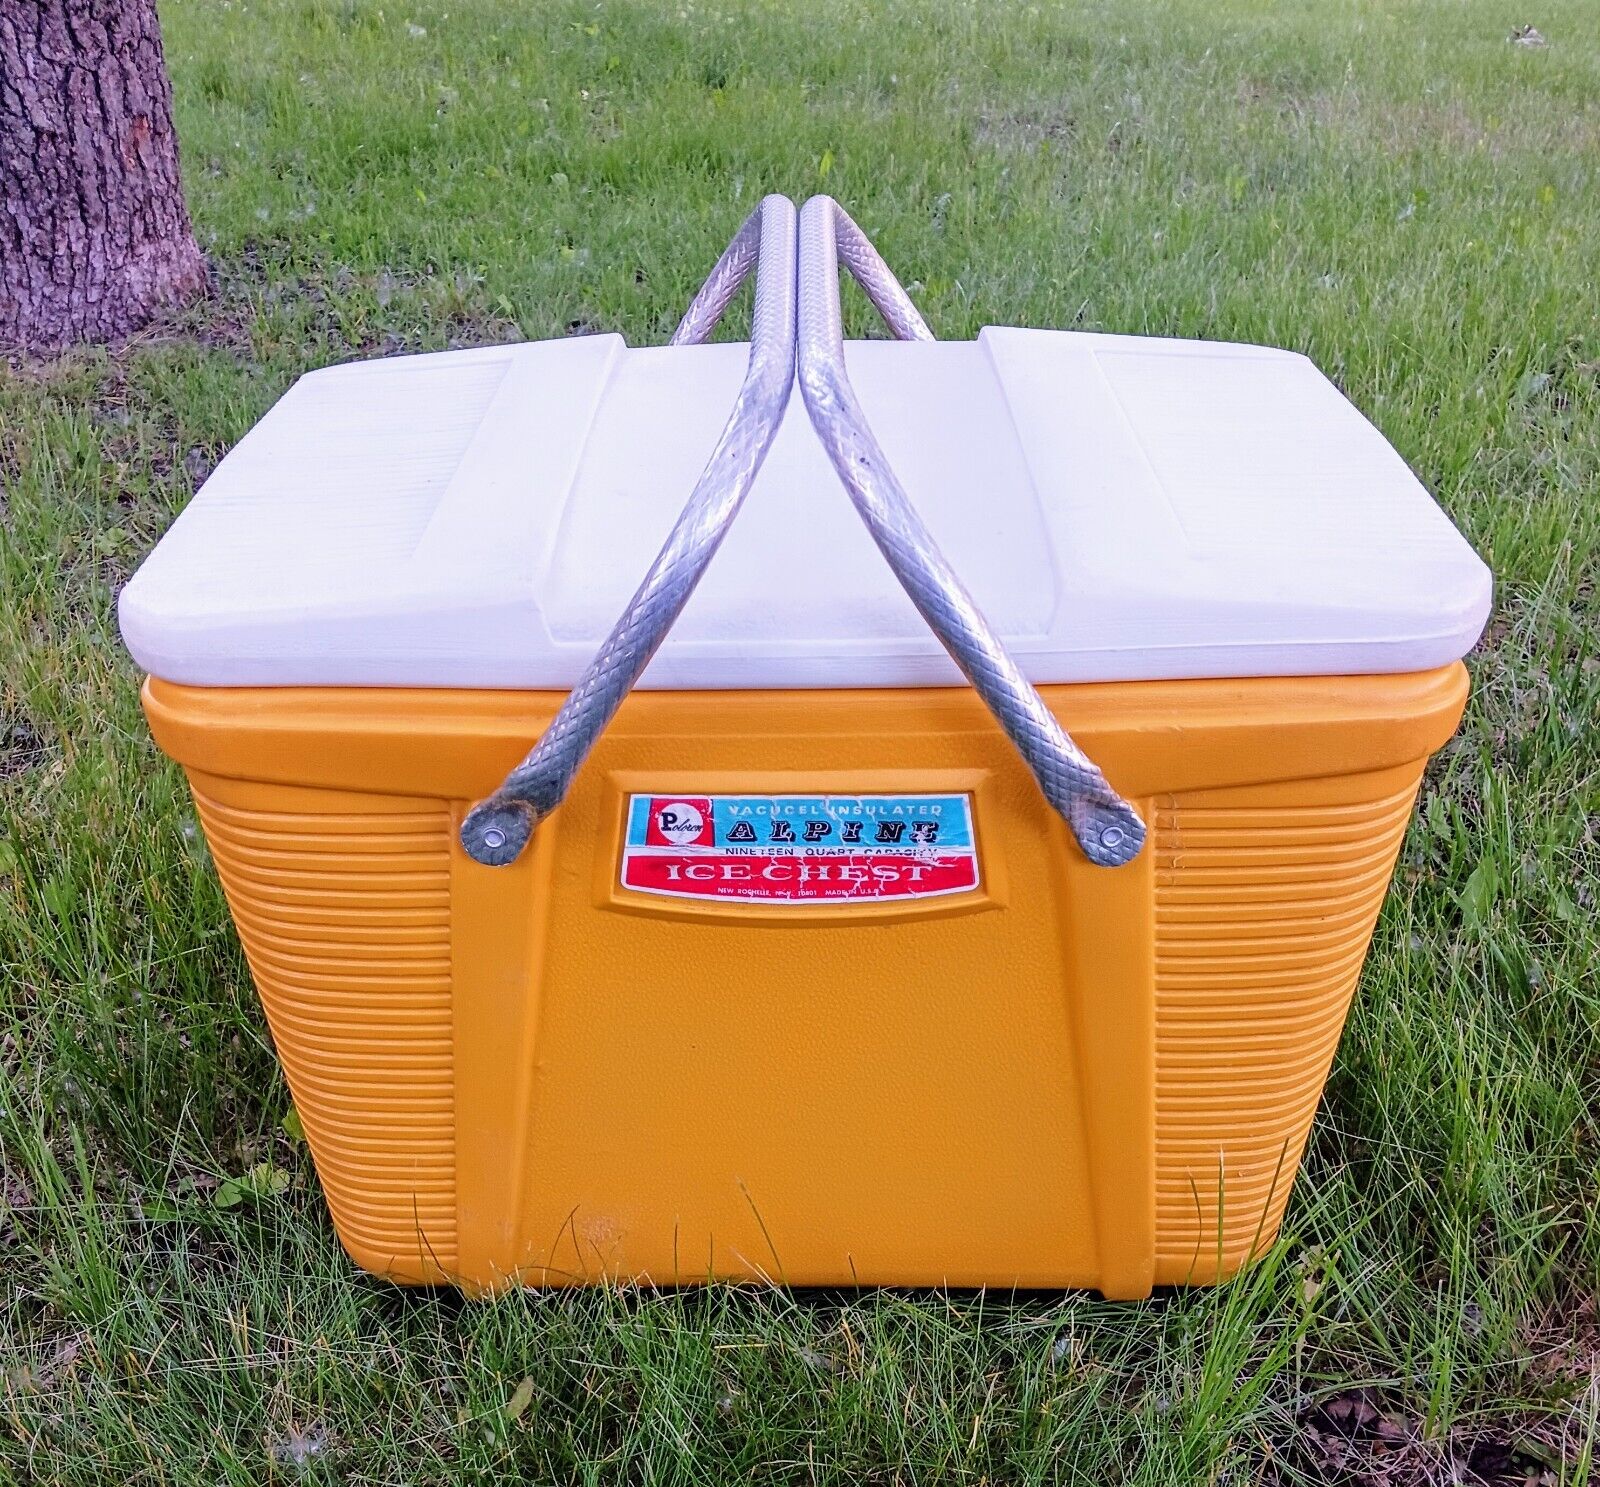 Vintage Poloron Yellow Alpine Ice Box Cooler with Aluminum Handles. 